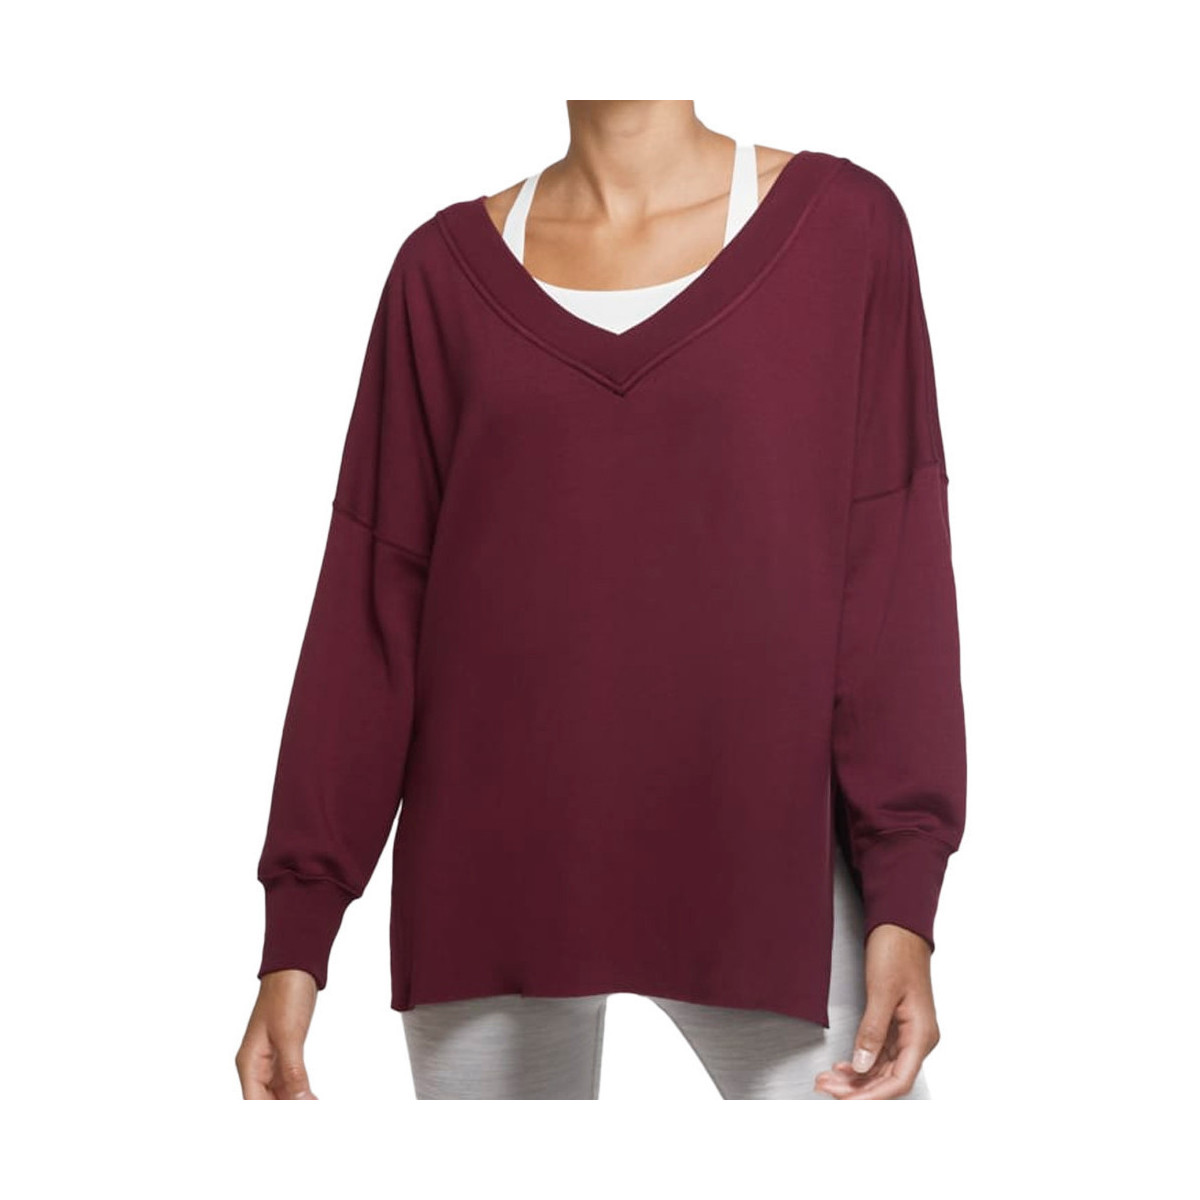 Textiel Dames Sweaters / Sweatshirts Nike  Rood